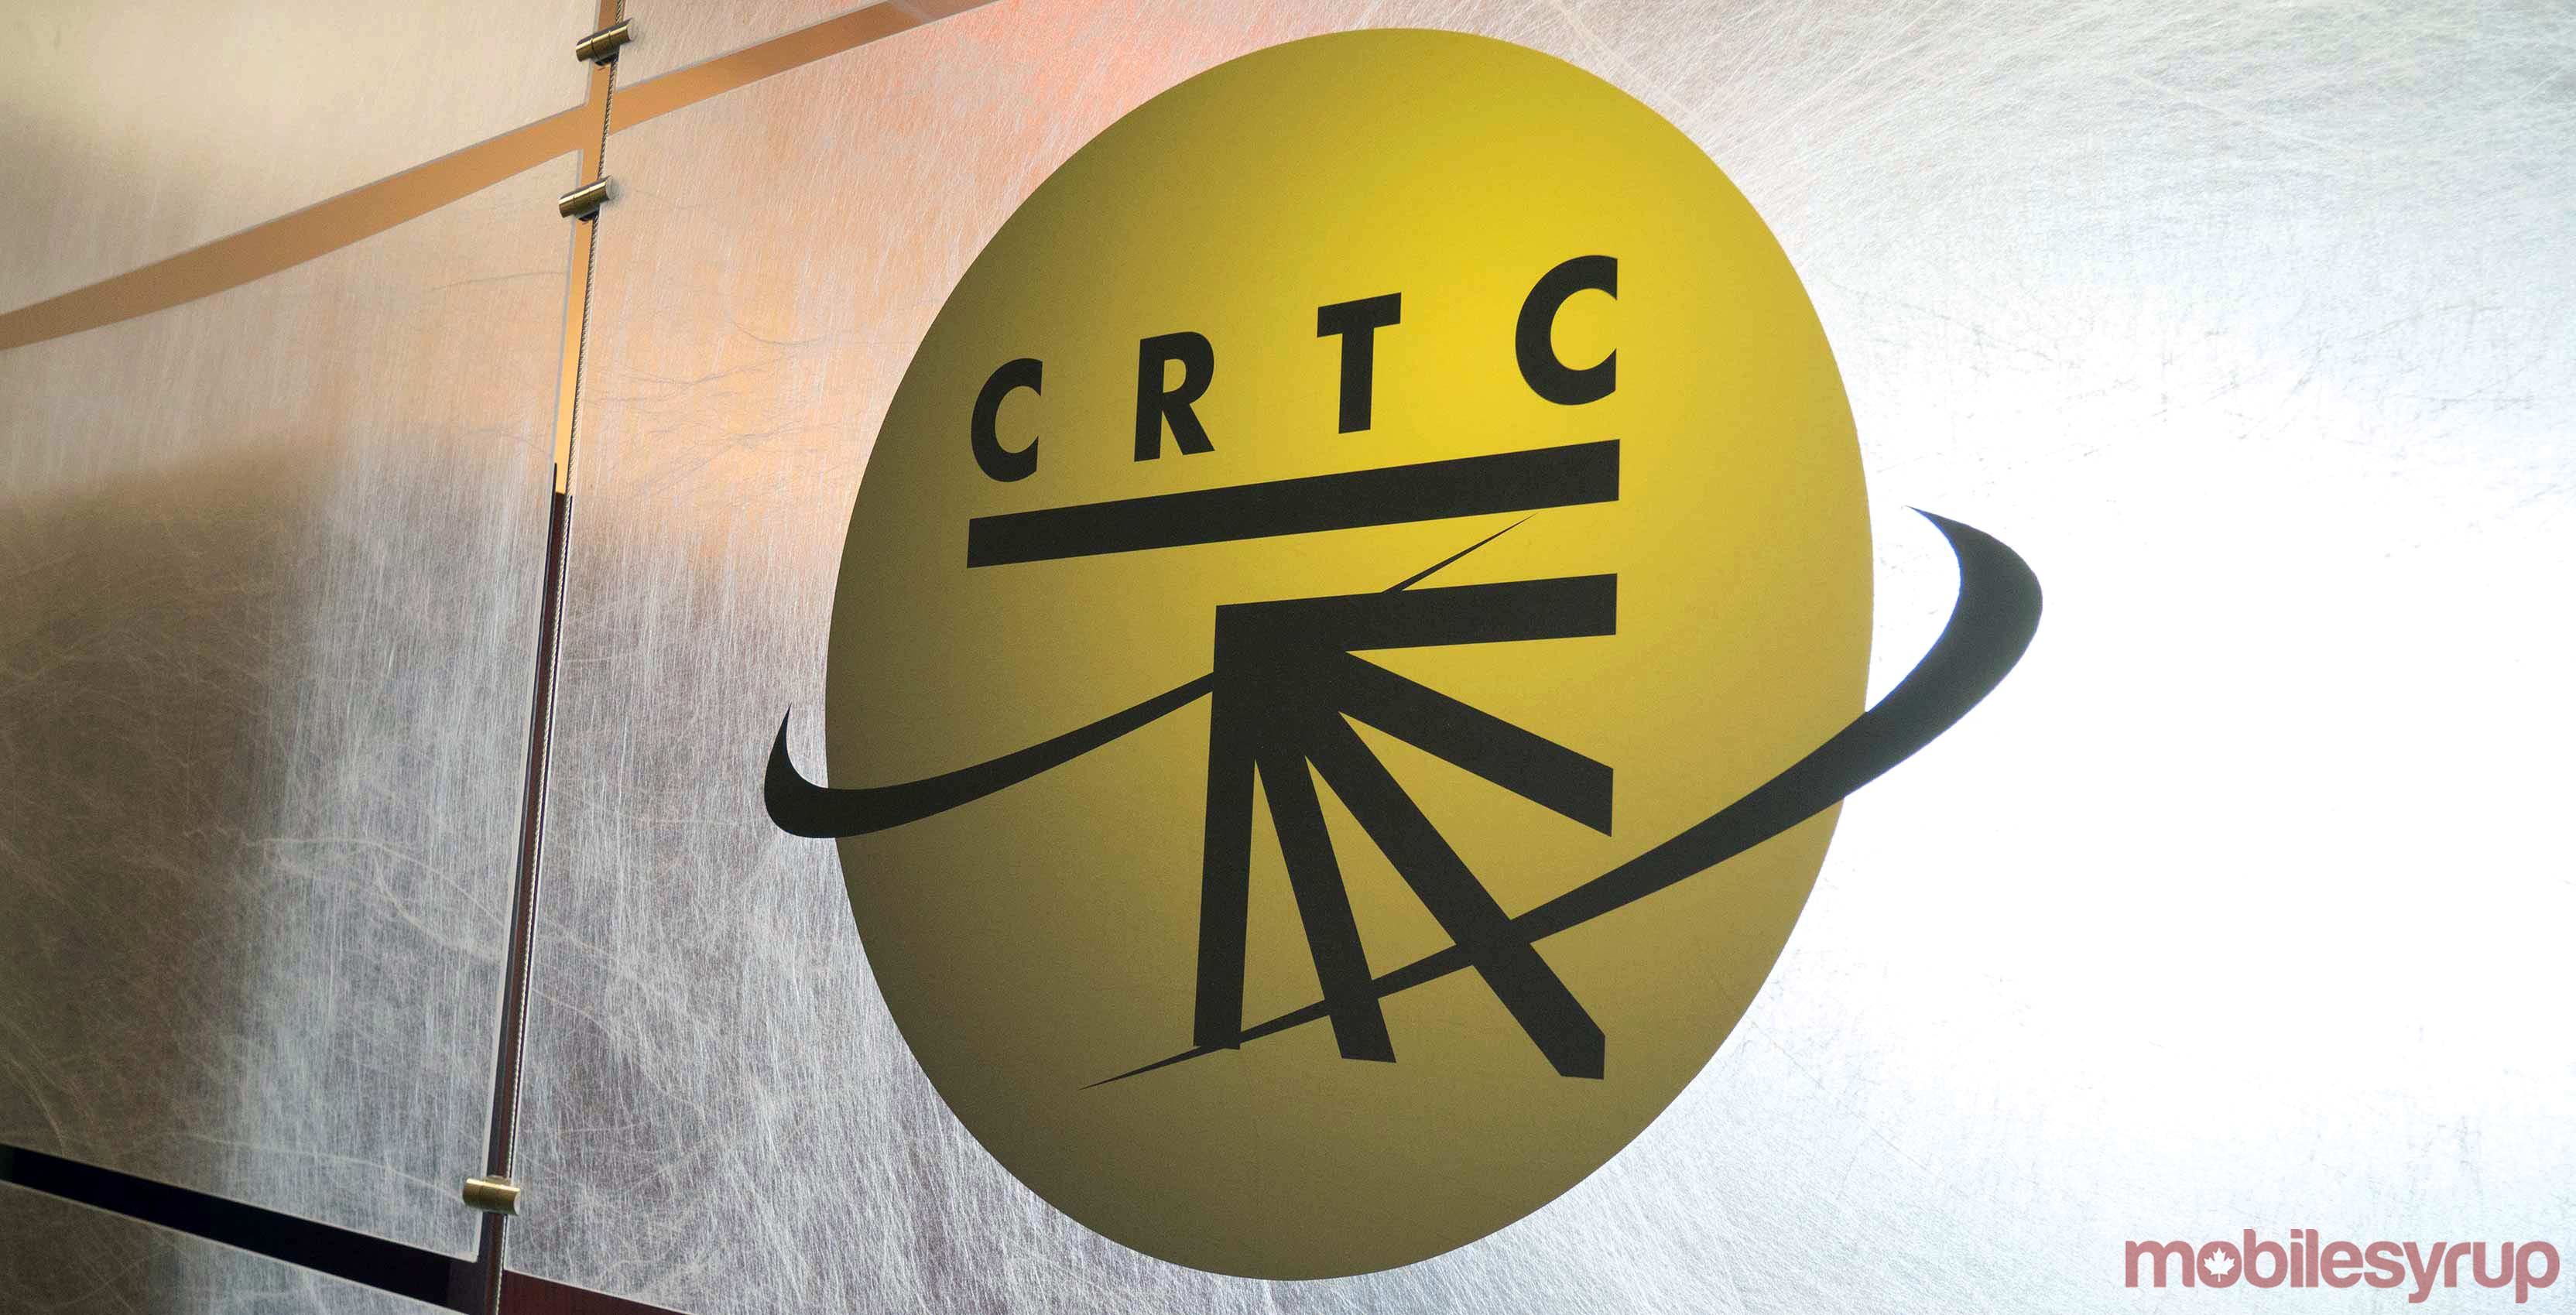 CRTC logo on wall